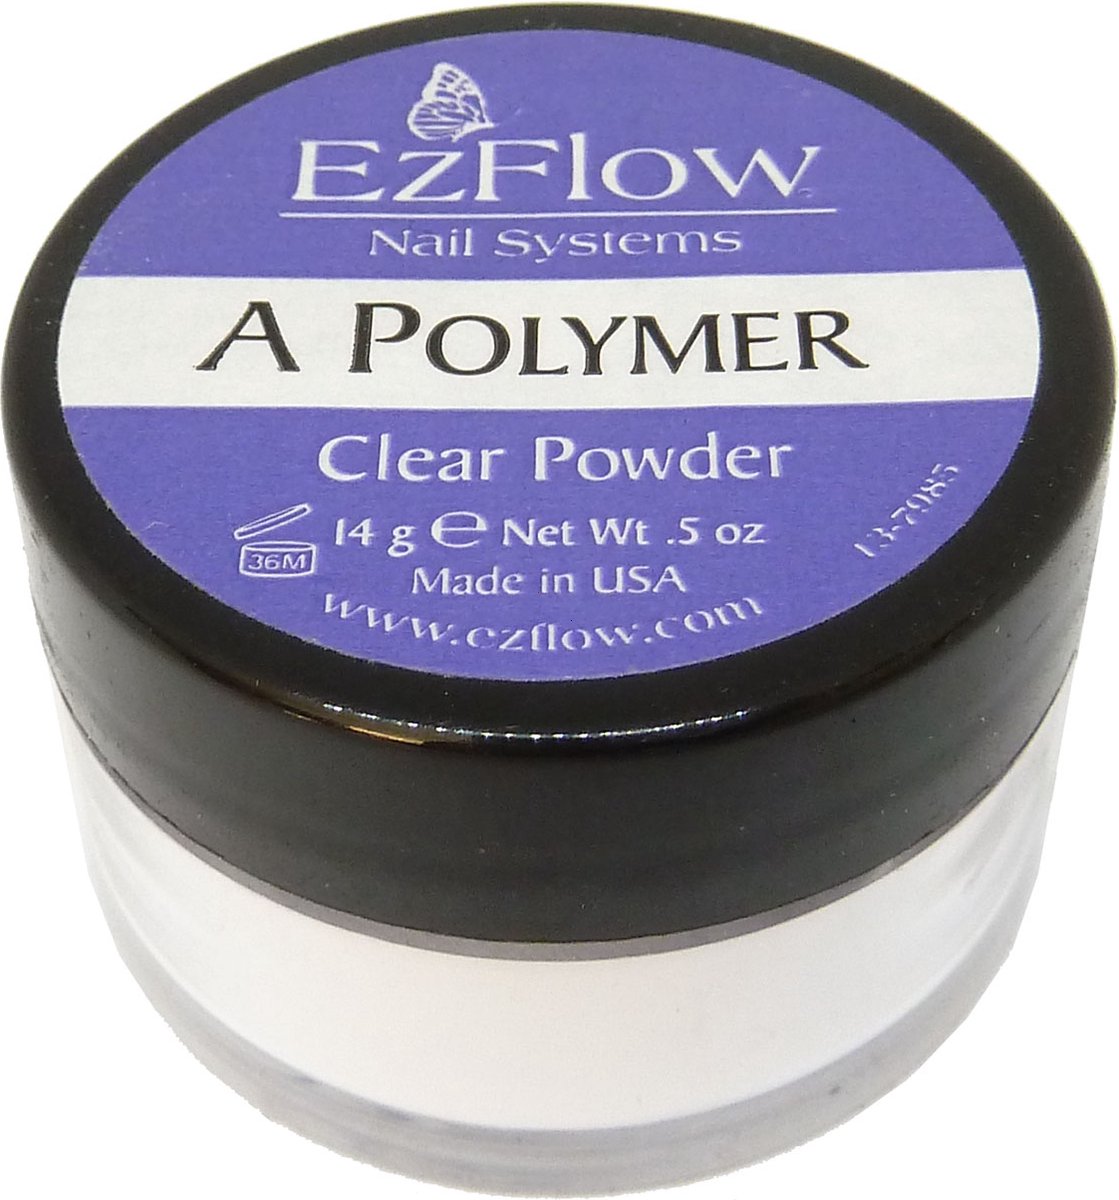 Ez Flow A Polymer Powder Acrylpoeder Manicure Nail Art Nagelverzorging 14g - Clear Powder Clear Powder